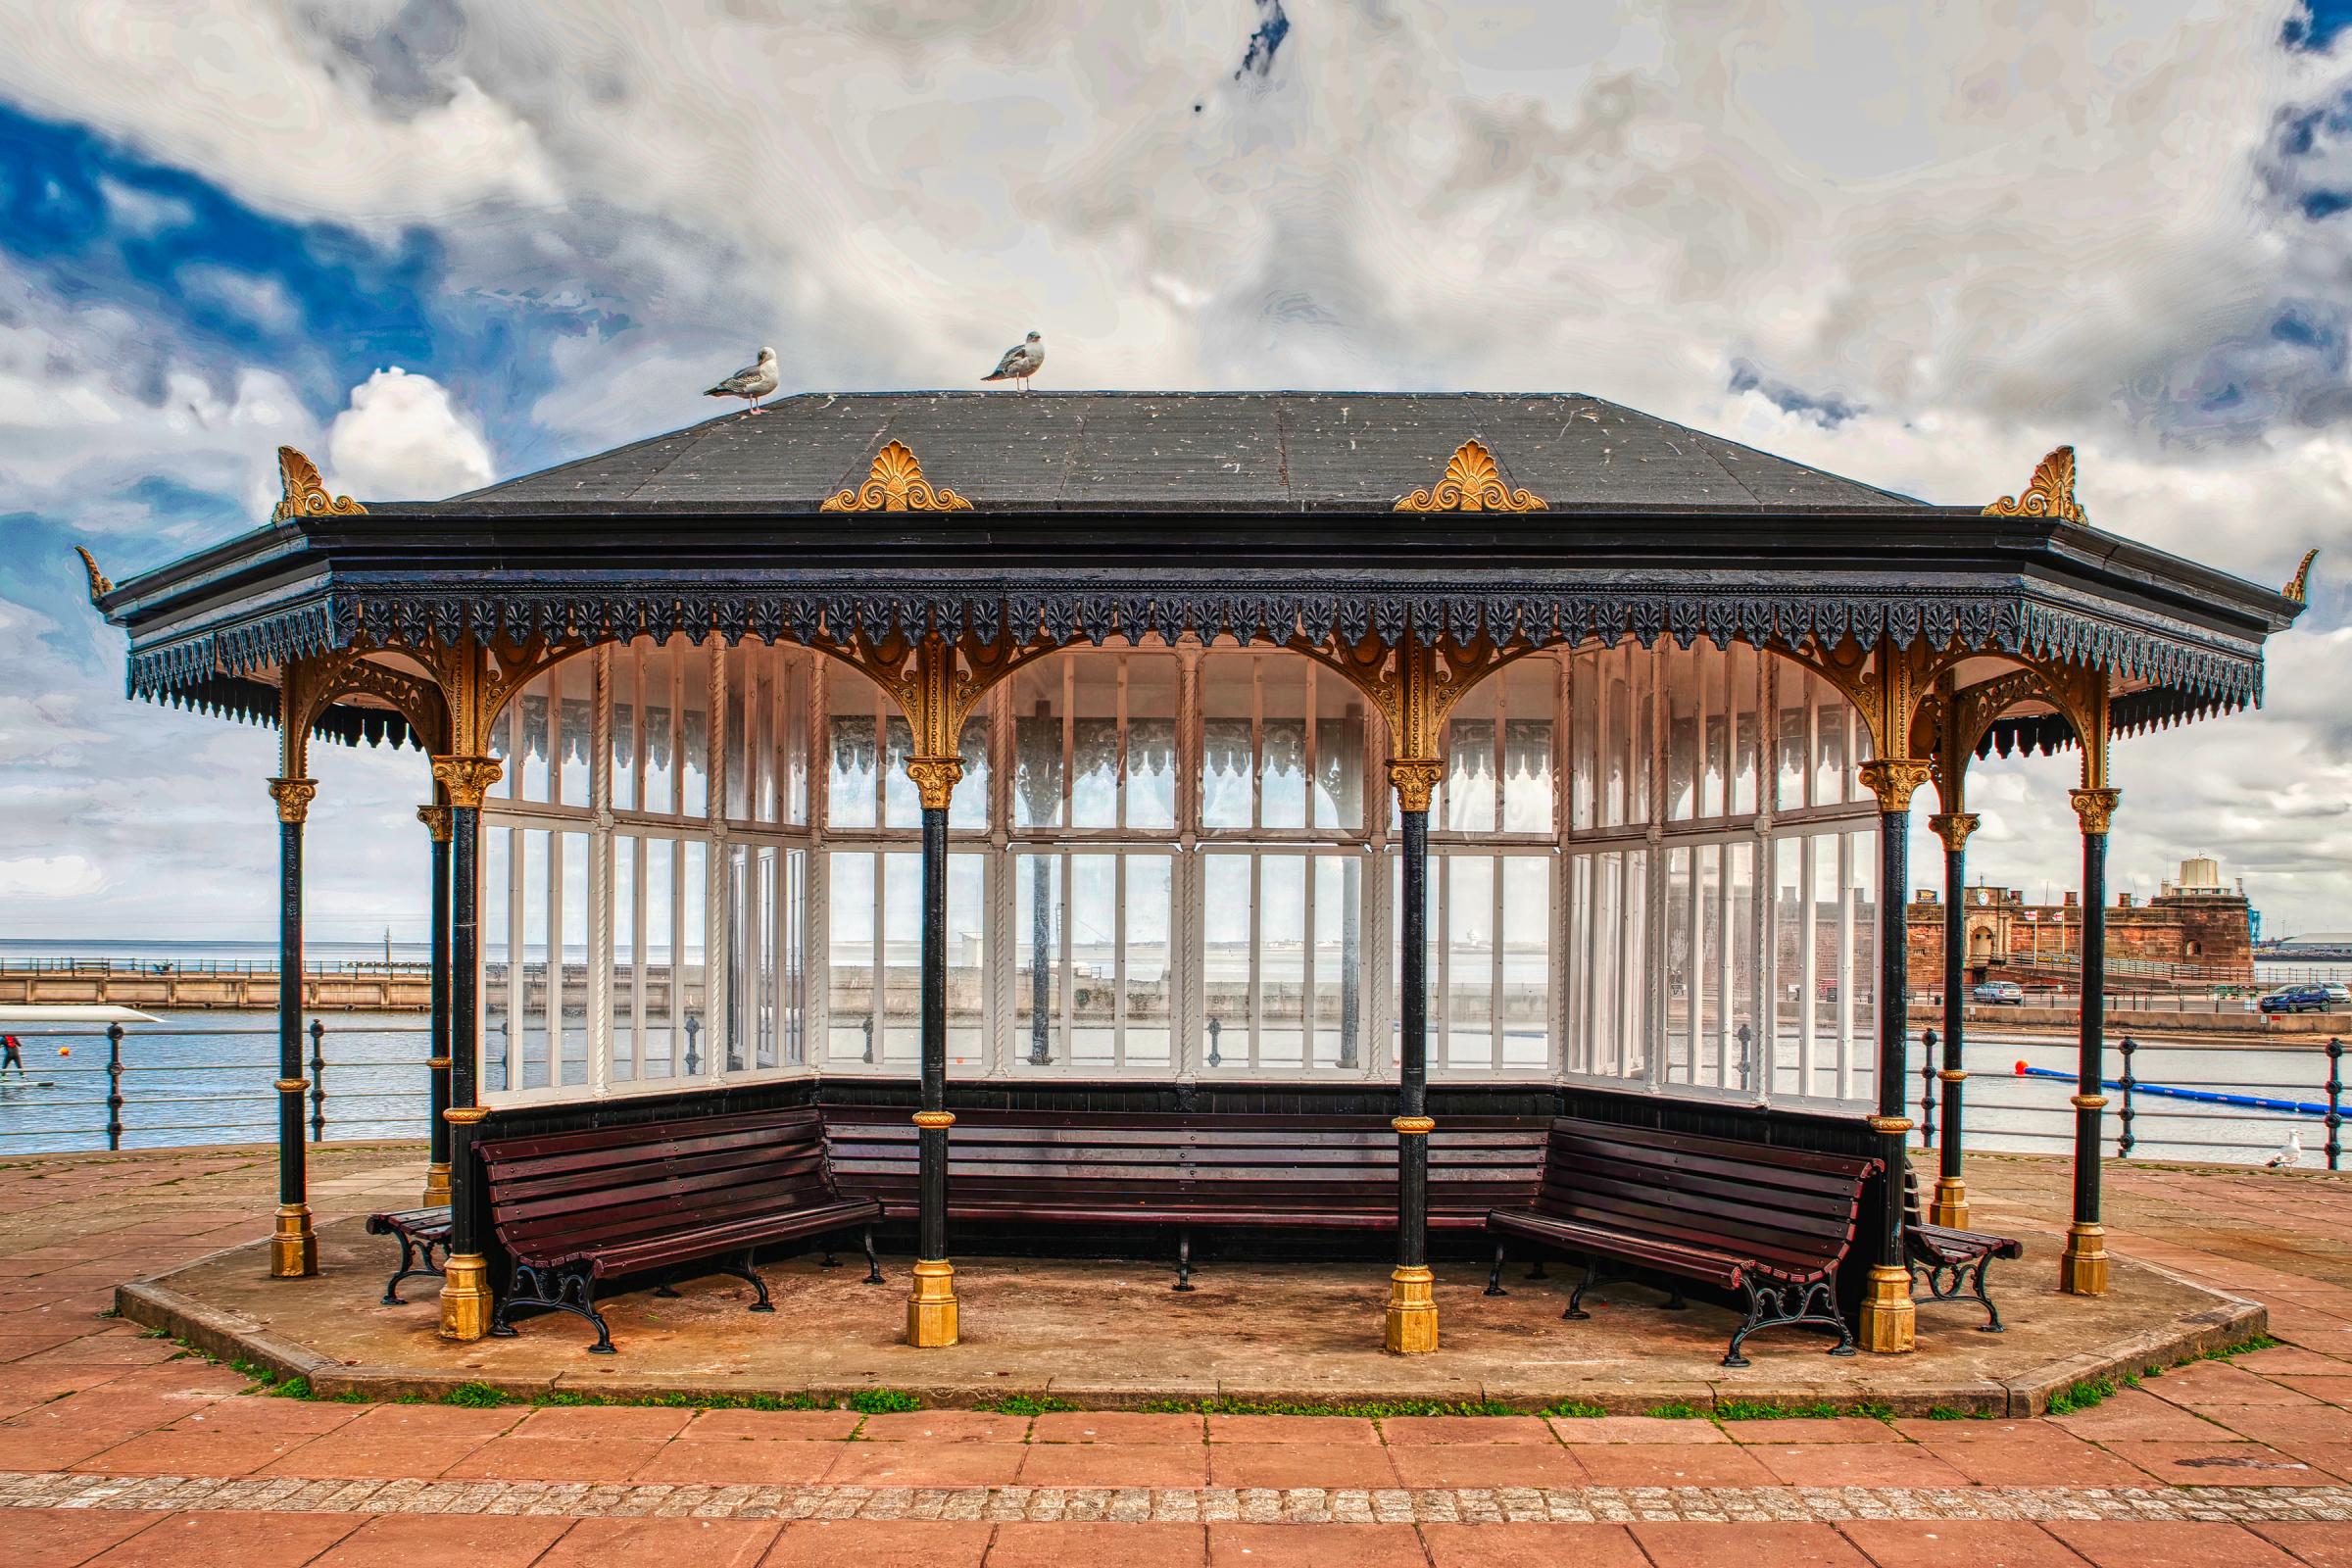 A seaside shelter at New Brighton promenade